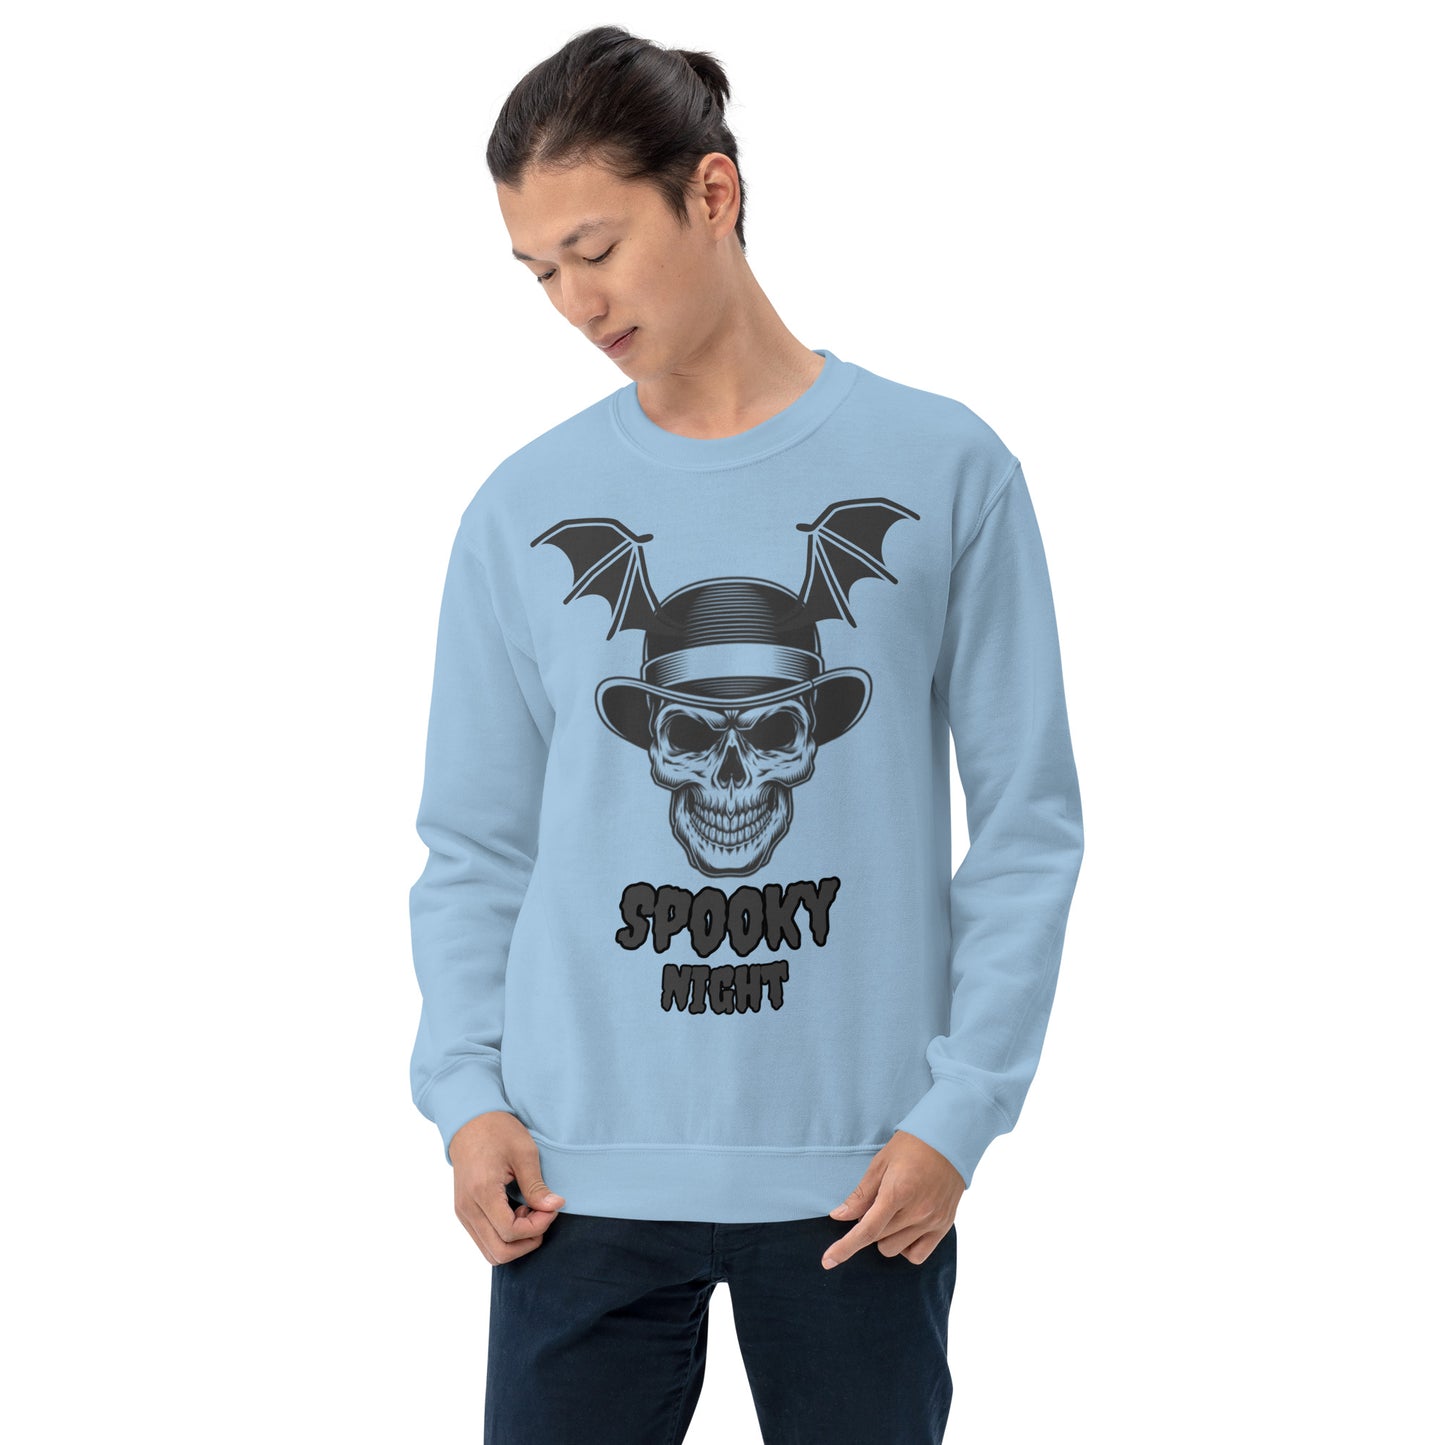 Spooky Night Halloween Sweatshirt